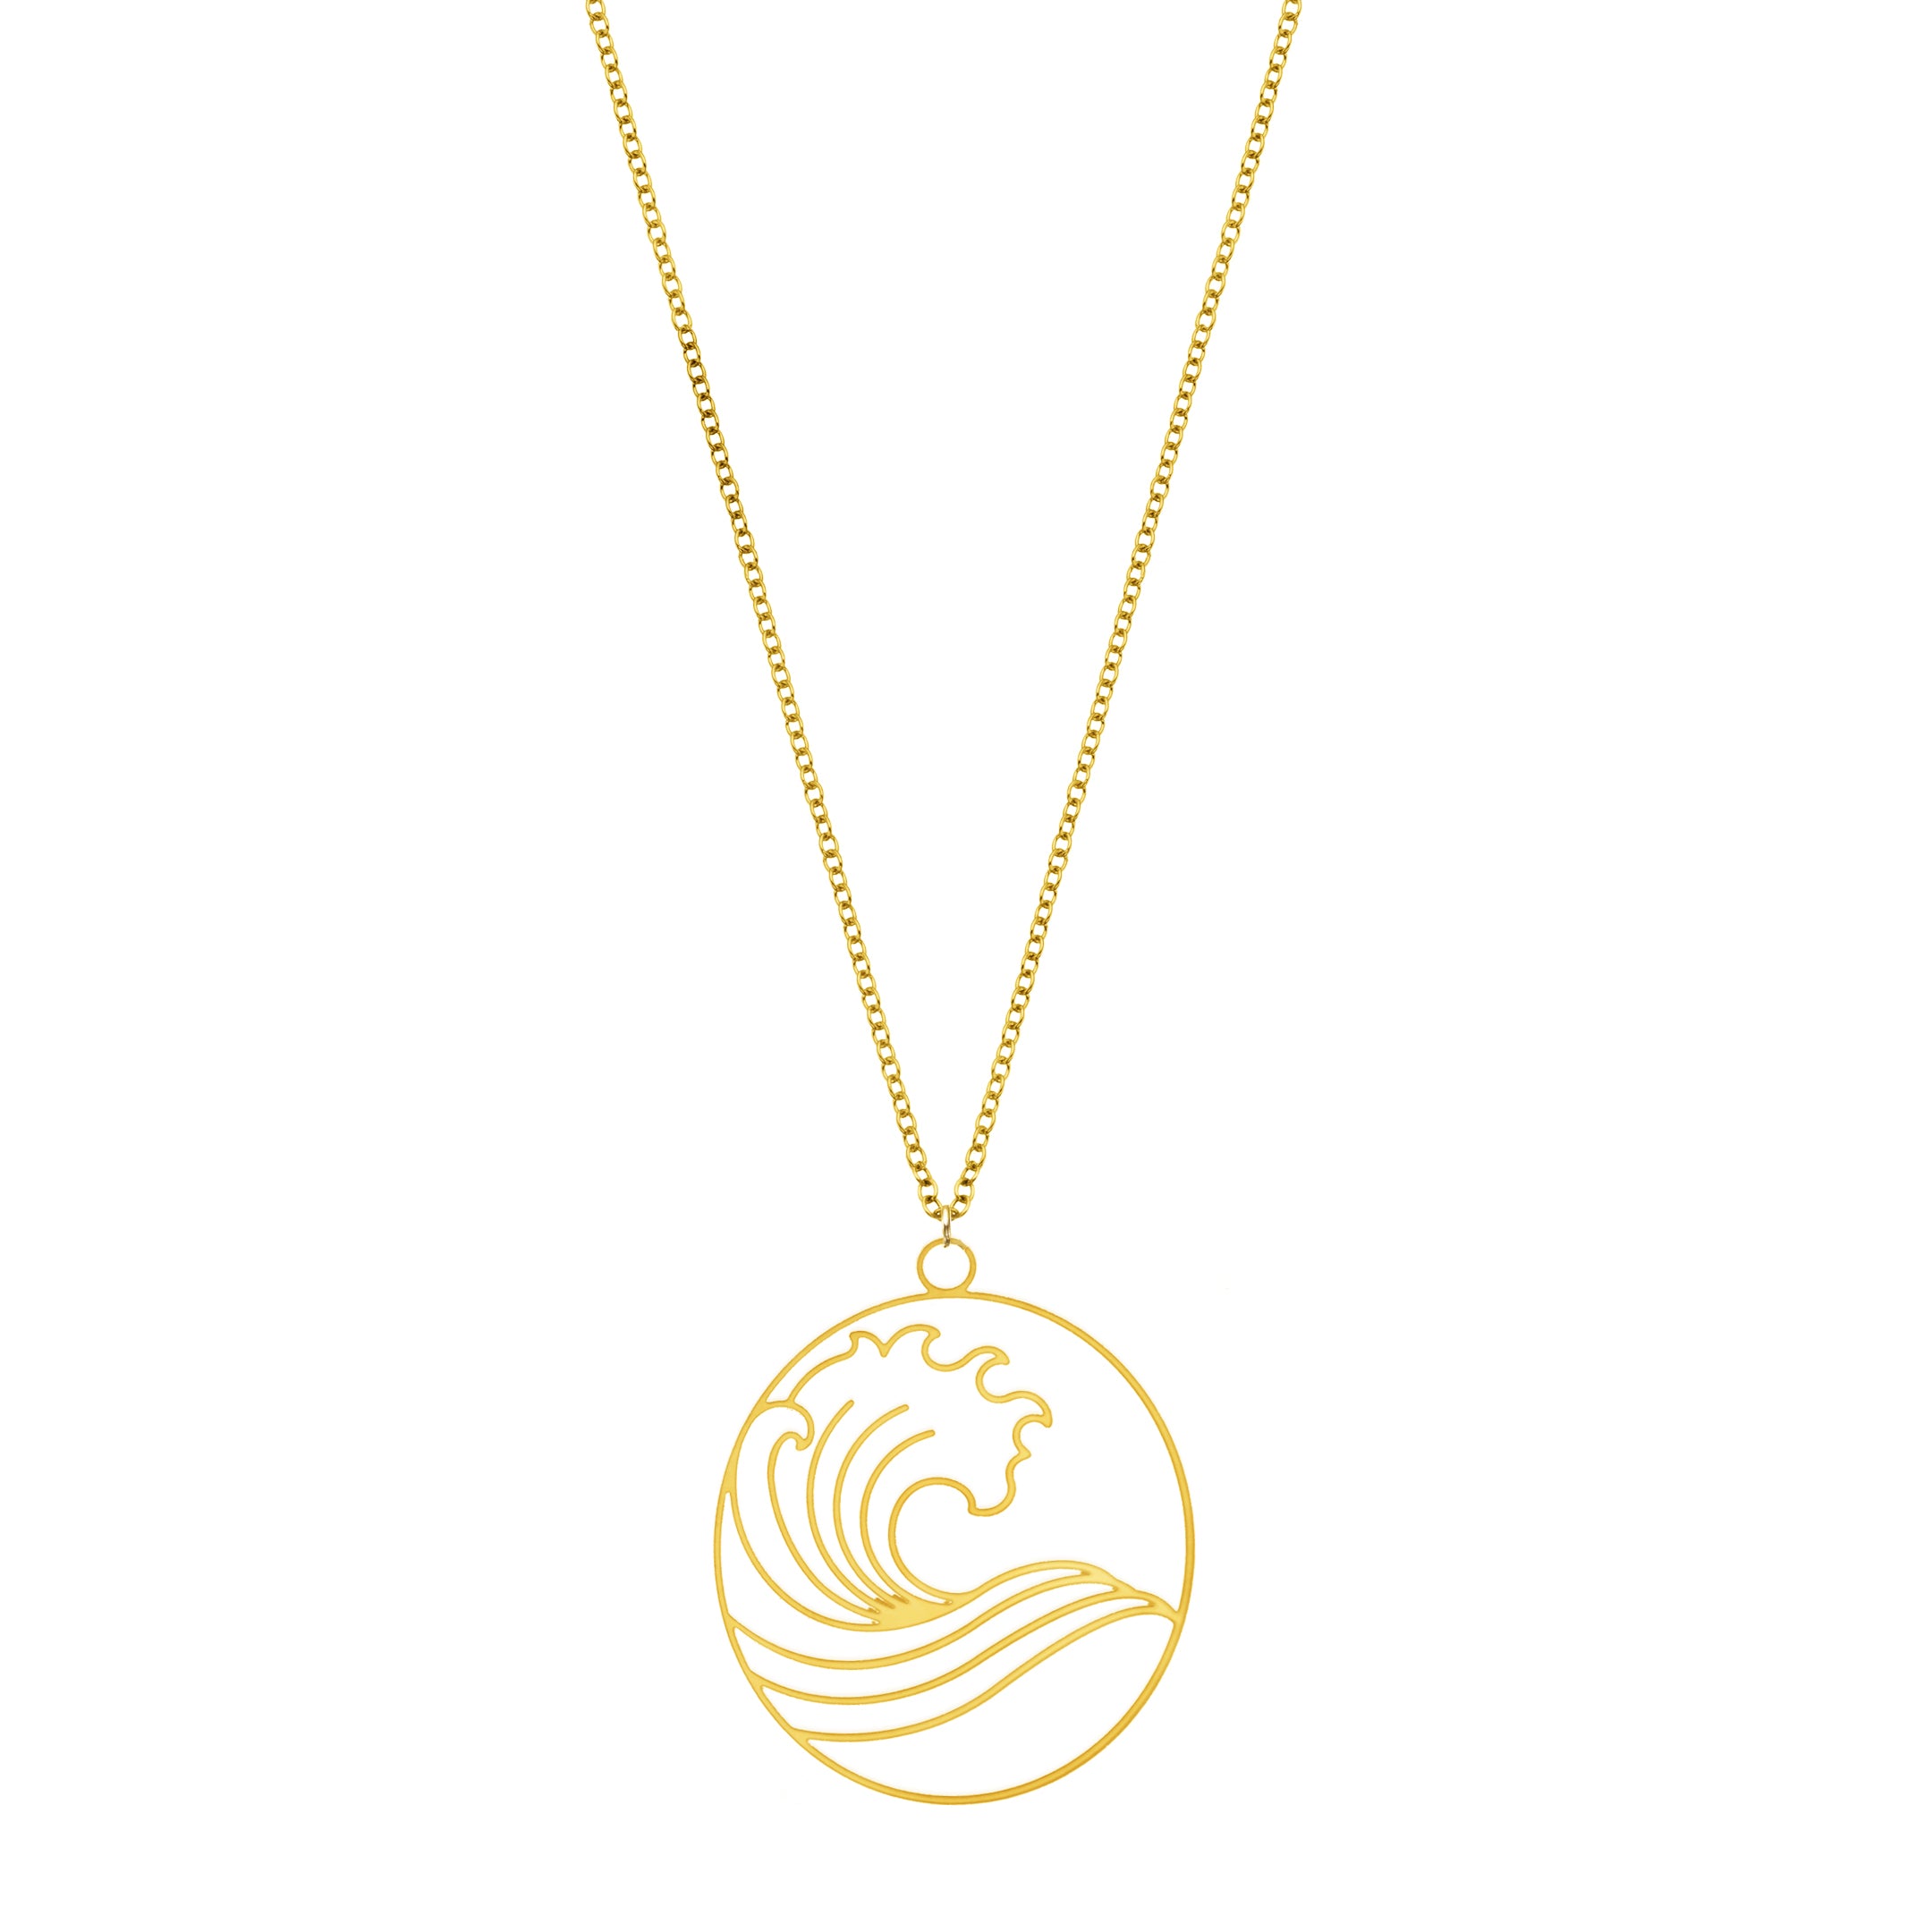 Whitecap Wave Necklace